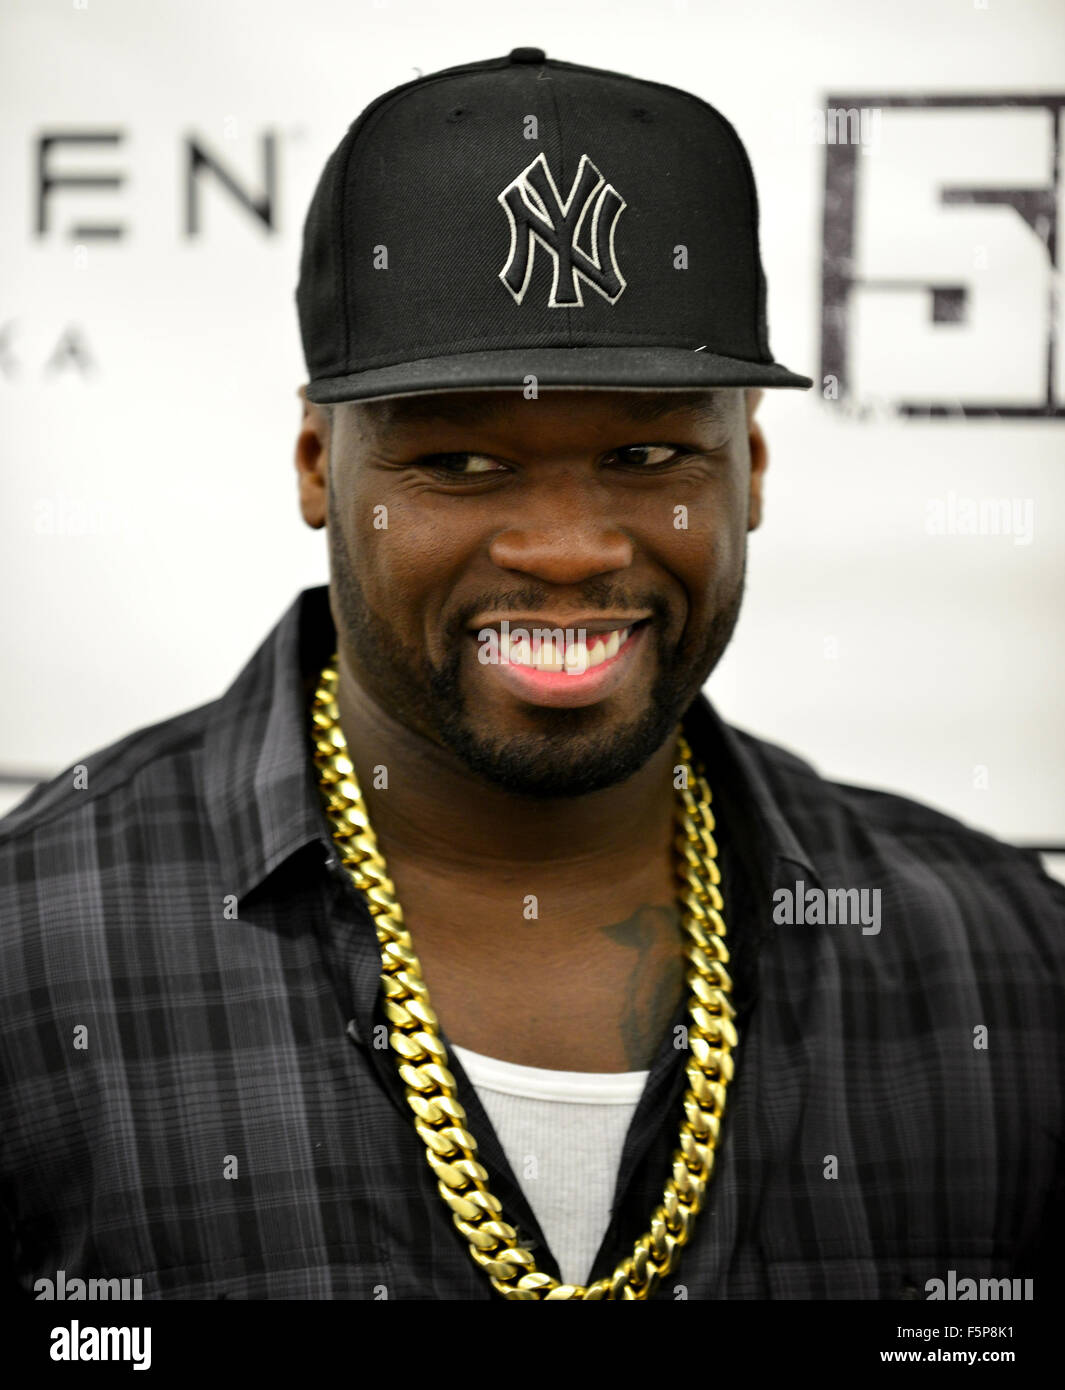 Curtis “50 Cent” Jackson signs an Effen Vodka bottle at Crown Wine ...